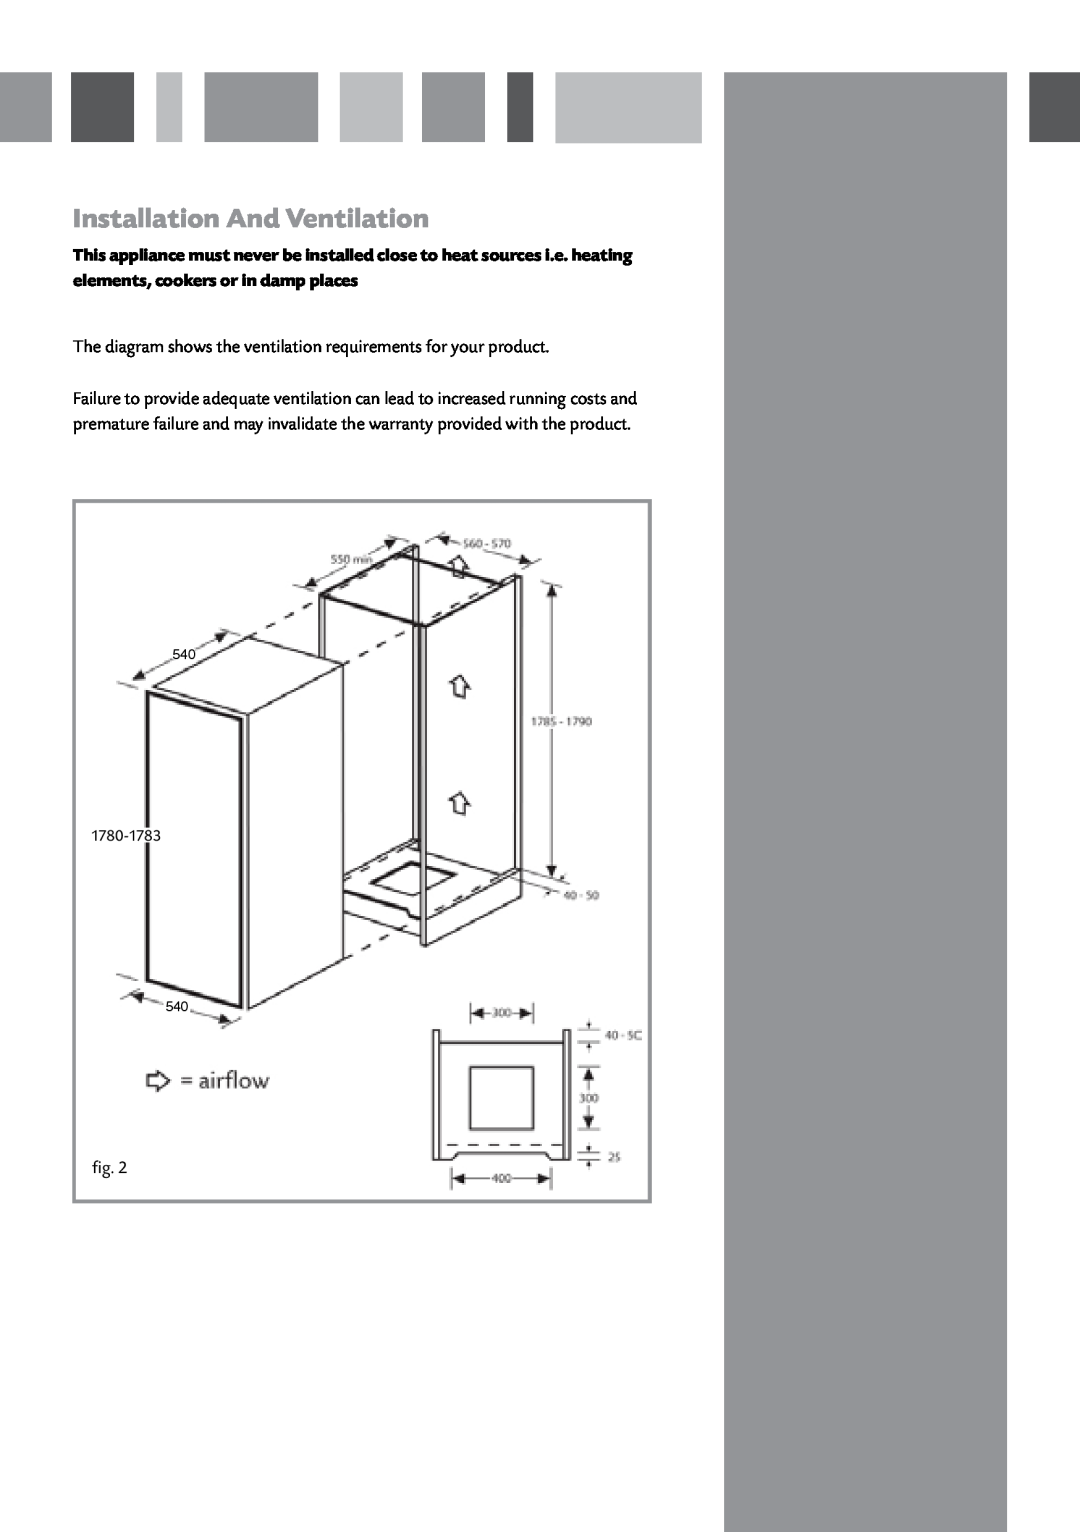 CDA FW820 manual Installation And Ventilation, 1780-1783, fig 